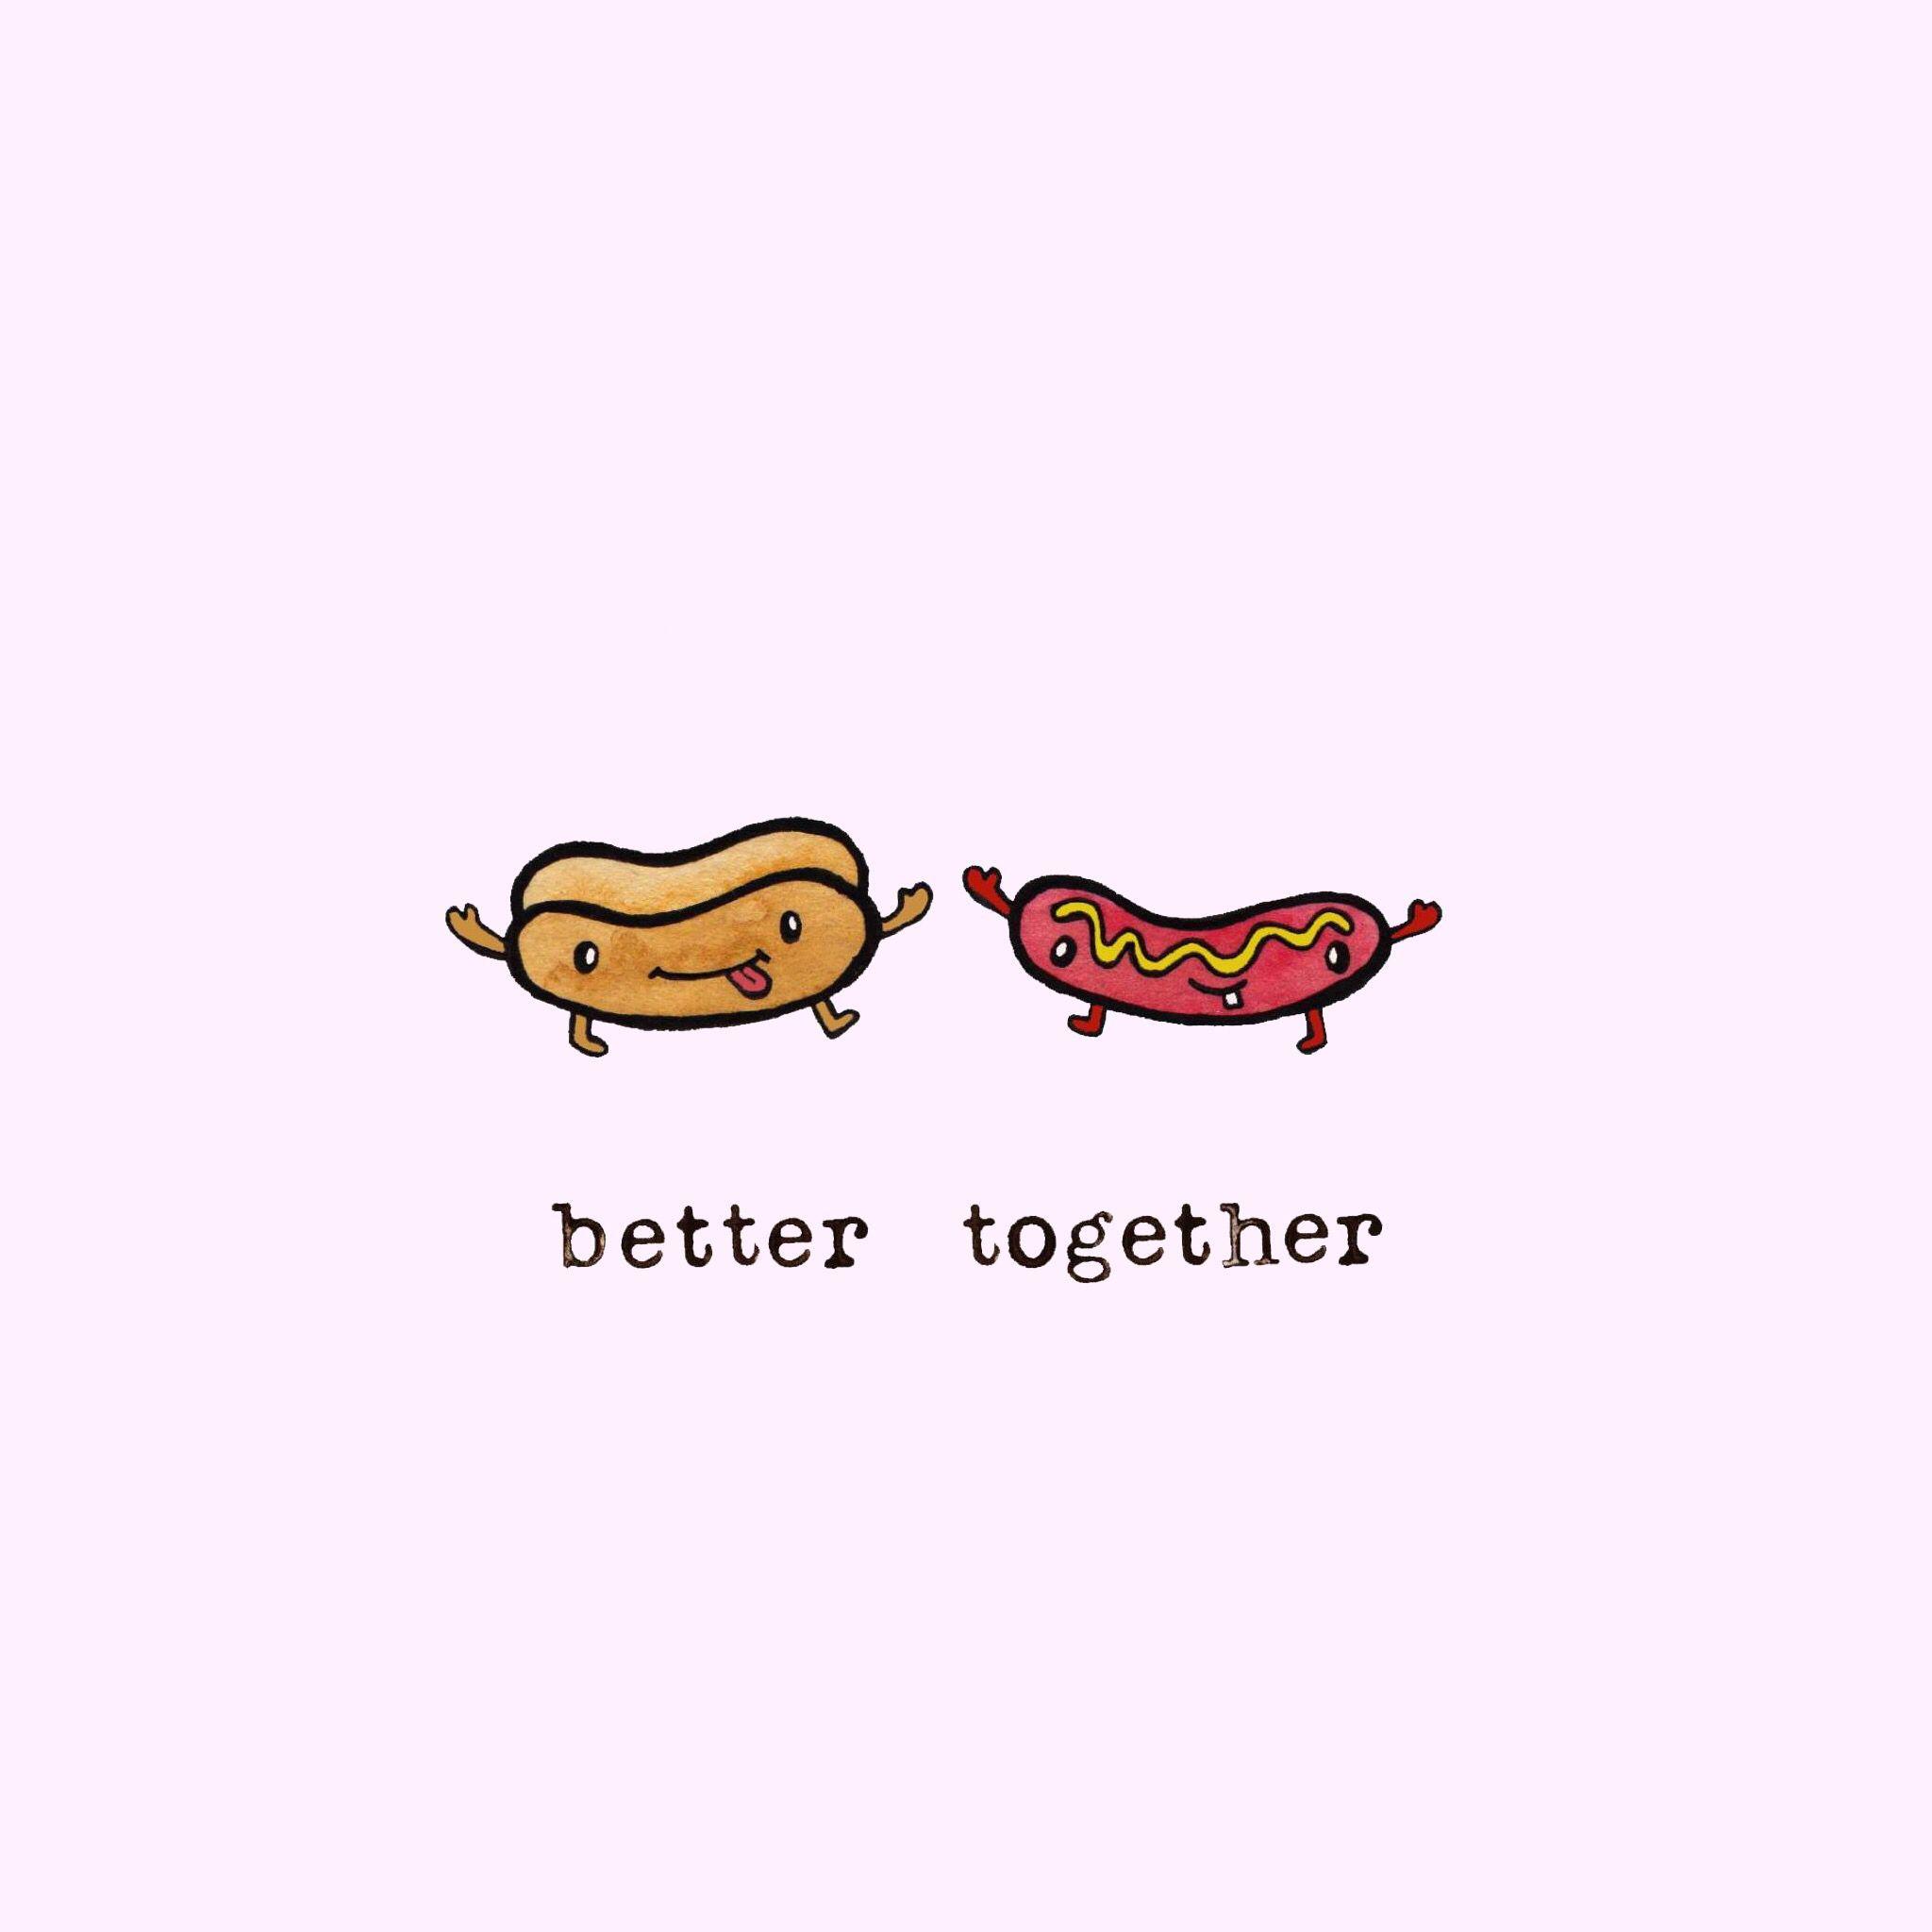 Better together. Better together, Cute